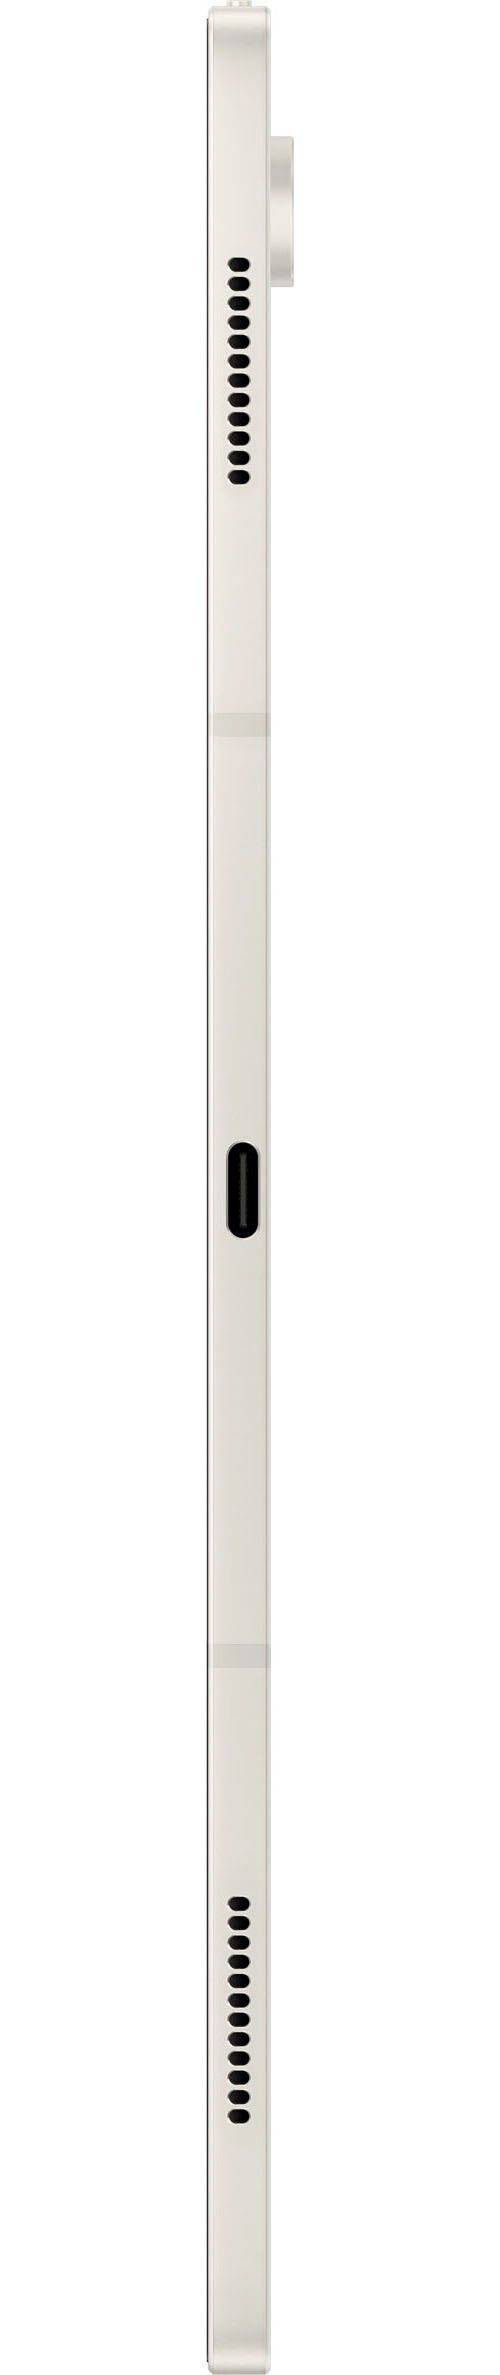 Ultra Galaxy Tab beige Android) GB, WiFi 512 (14,6", S9 Samsung Tablet